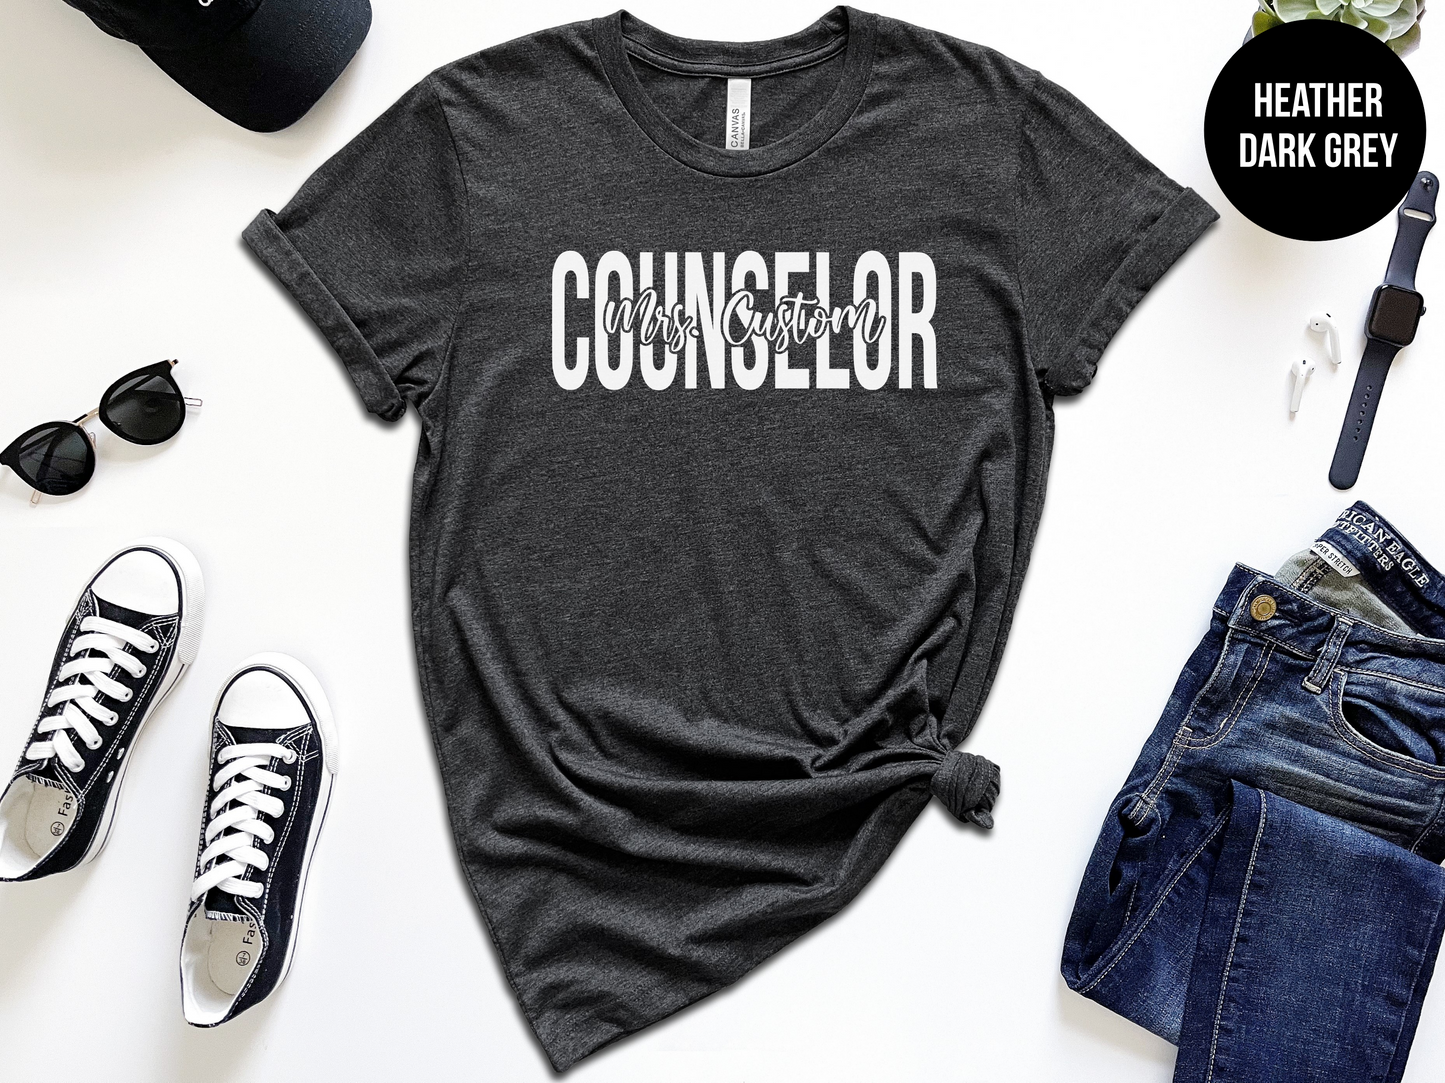 Customized School Counselor Shirt